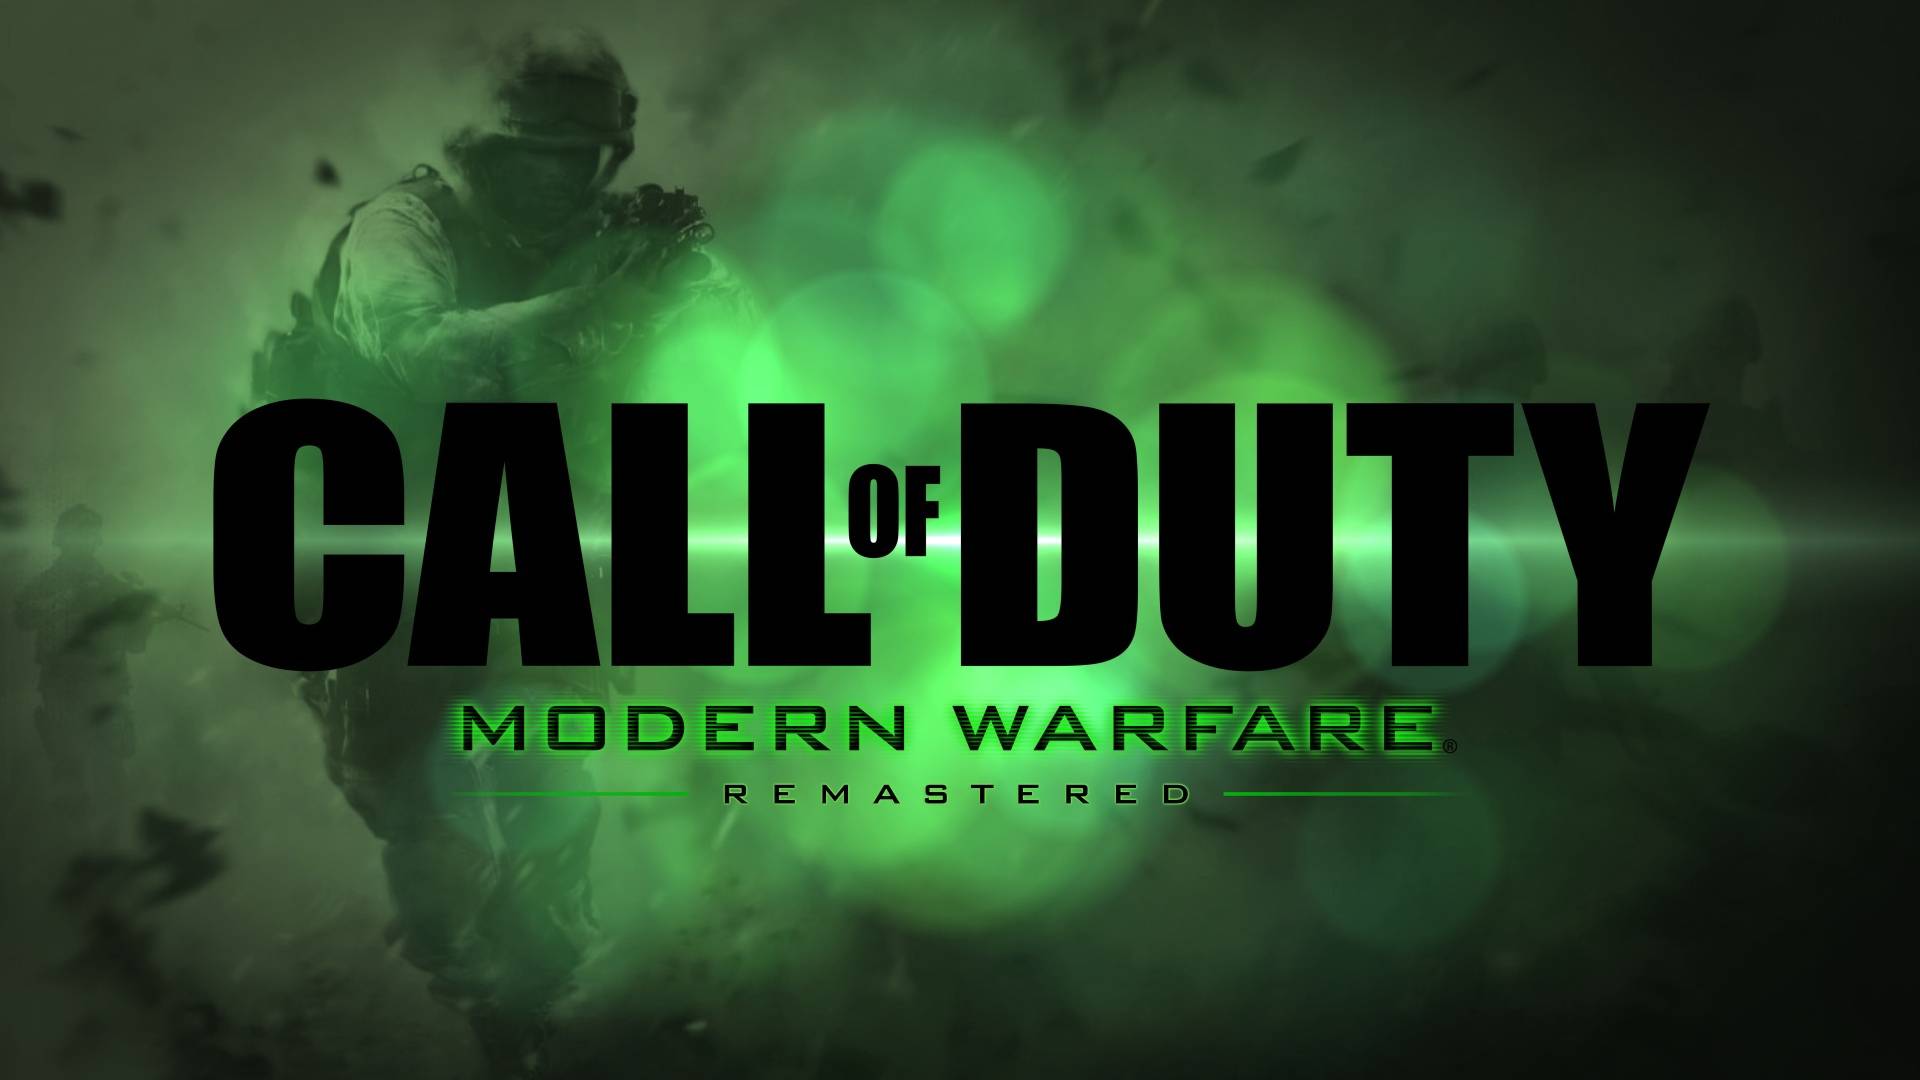 Call of Duty Modern Warfare Remastered (4 часть, финал)